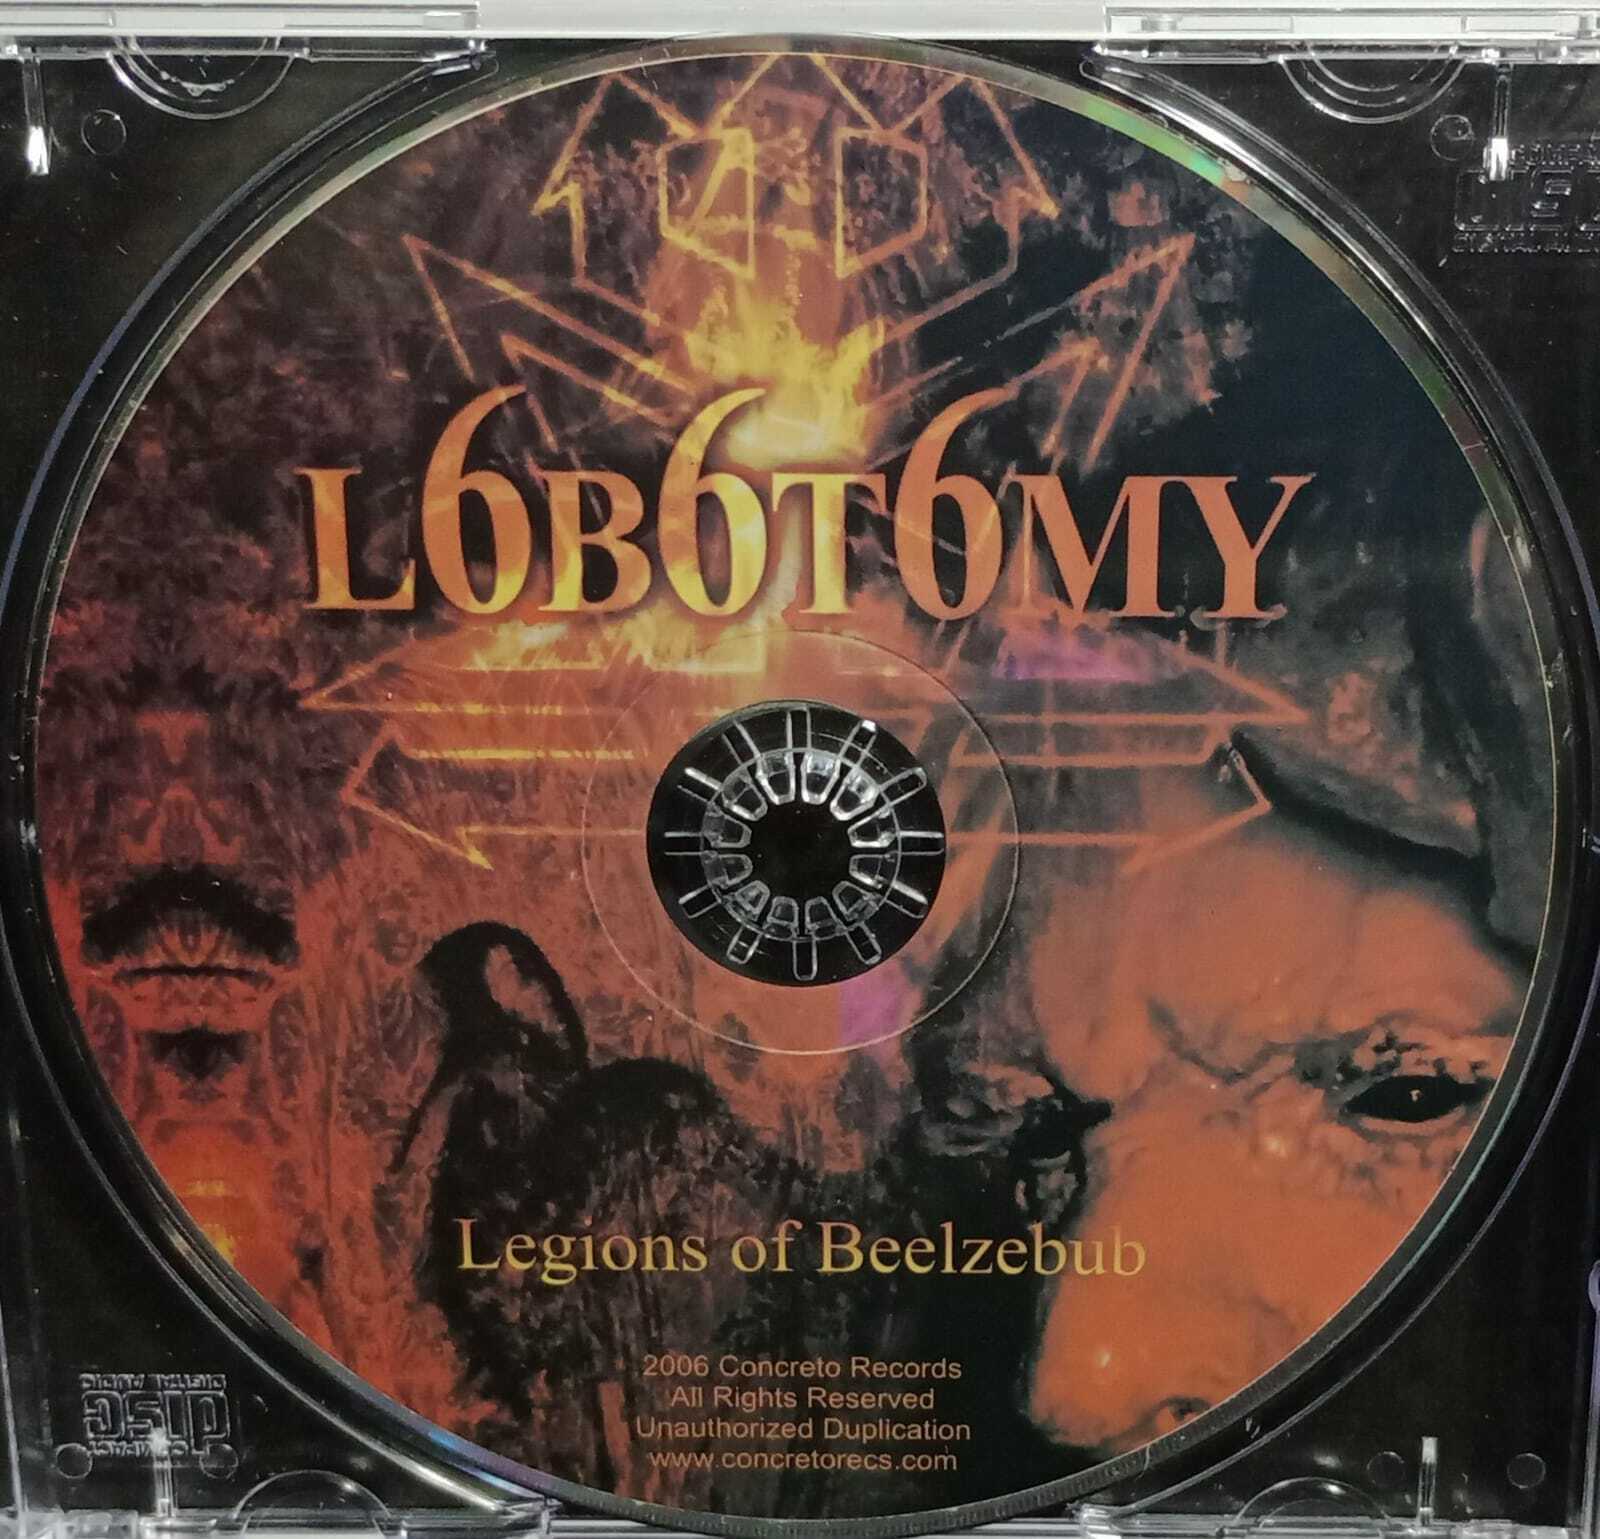 CD - L6b6t6my - Legions Of Beelzebub (imp)